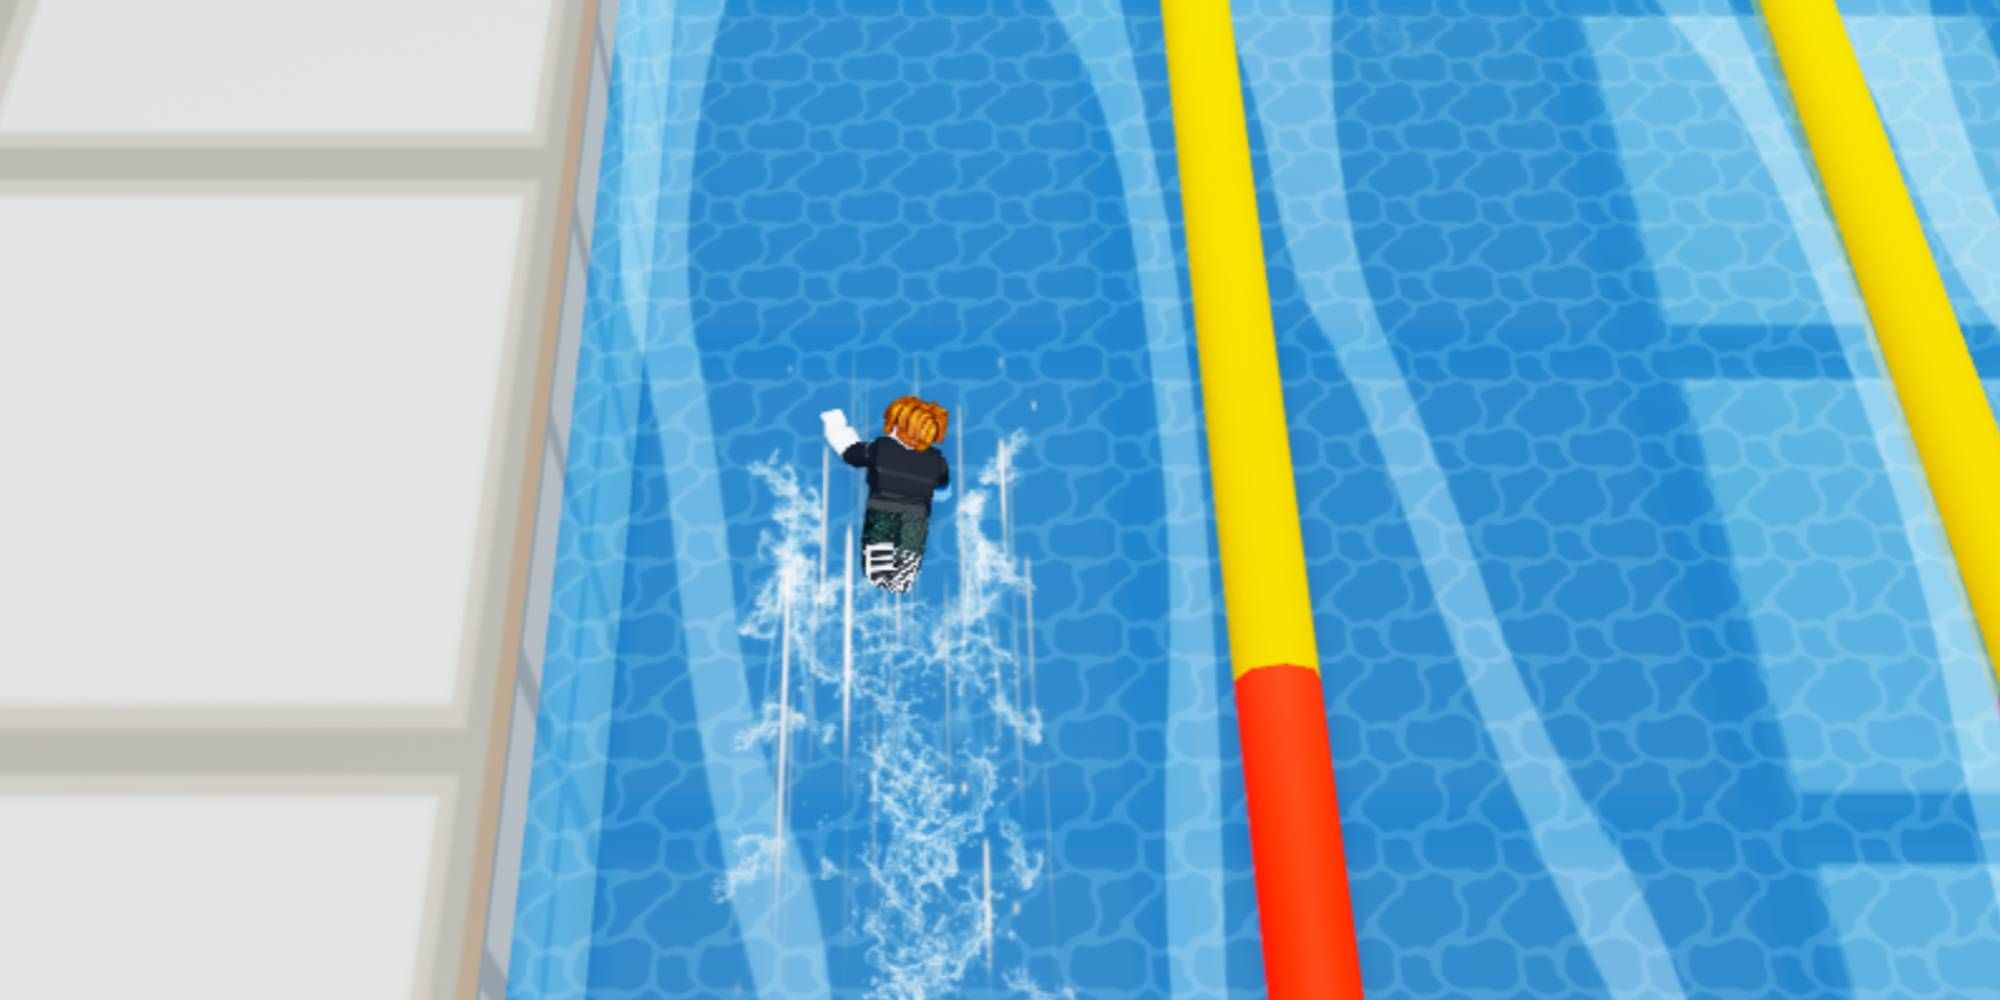 Swim Race Simulator character in the pool